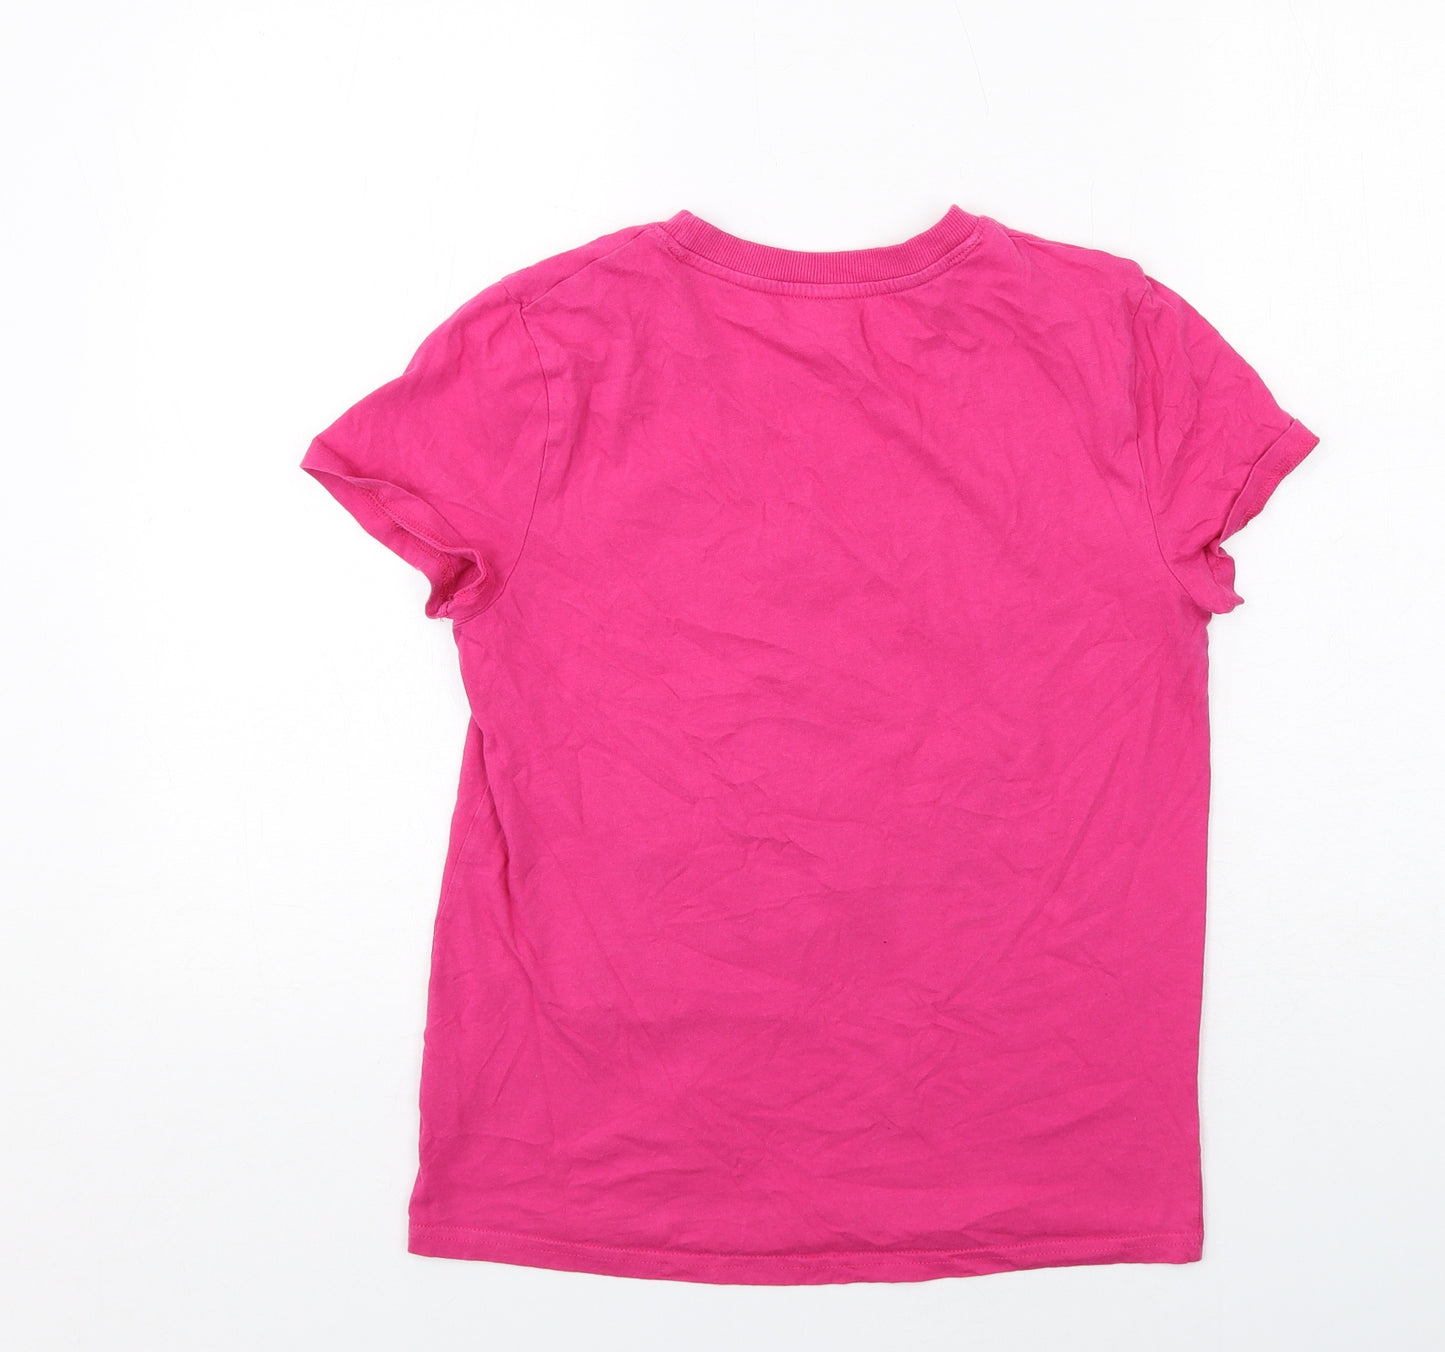 Snoopy Womens Pink Cotton Basic T-Shirt Size 2XS Crew Neck